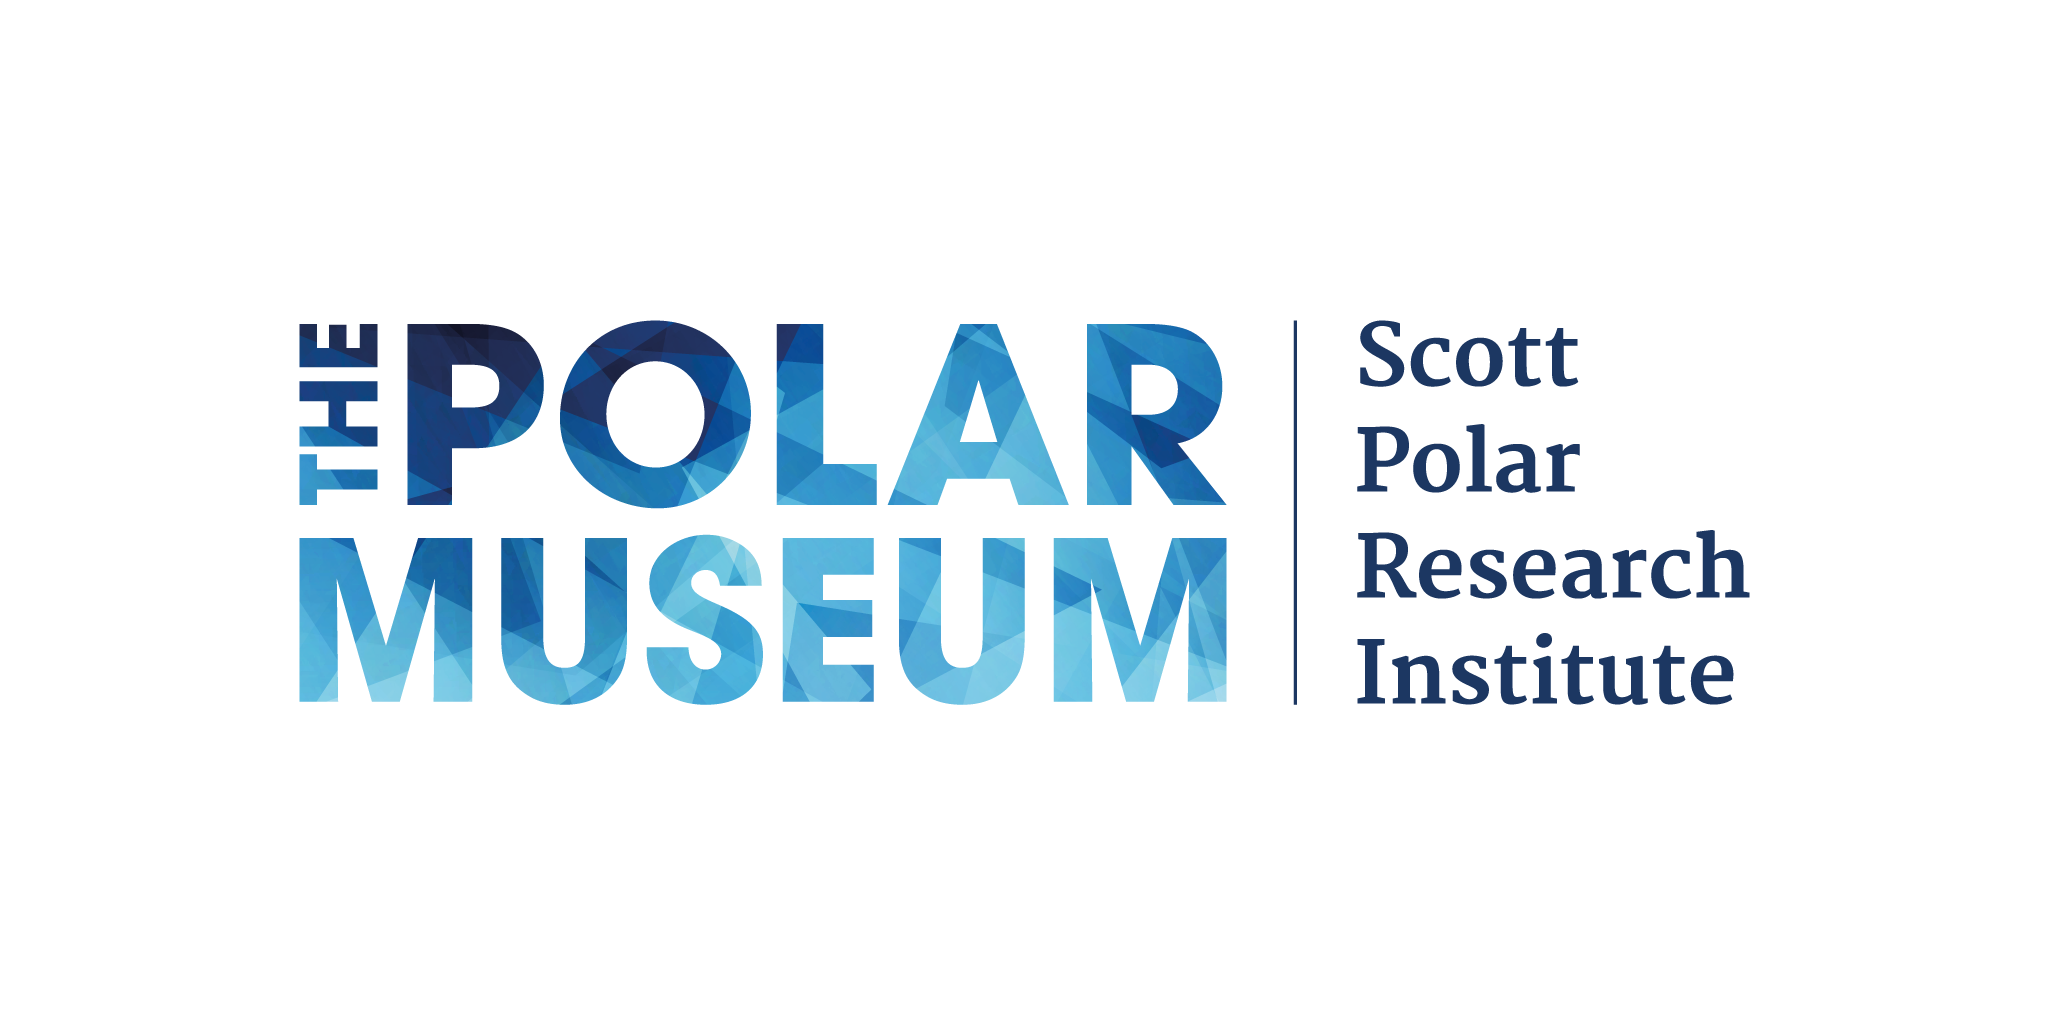 The logo of the Polar Museum of the Scott Polar Research Institute